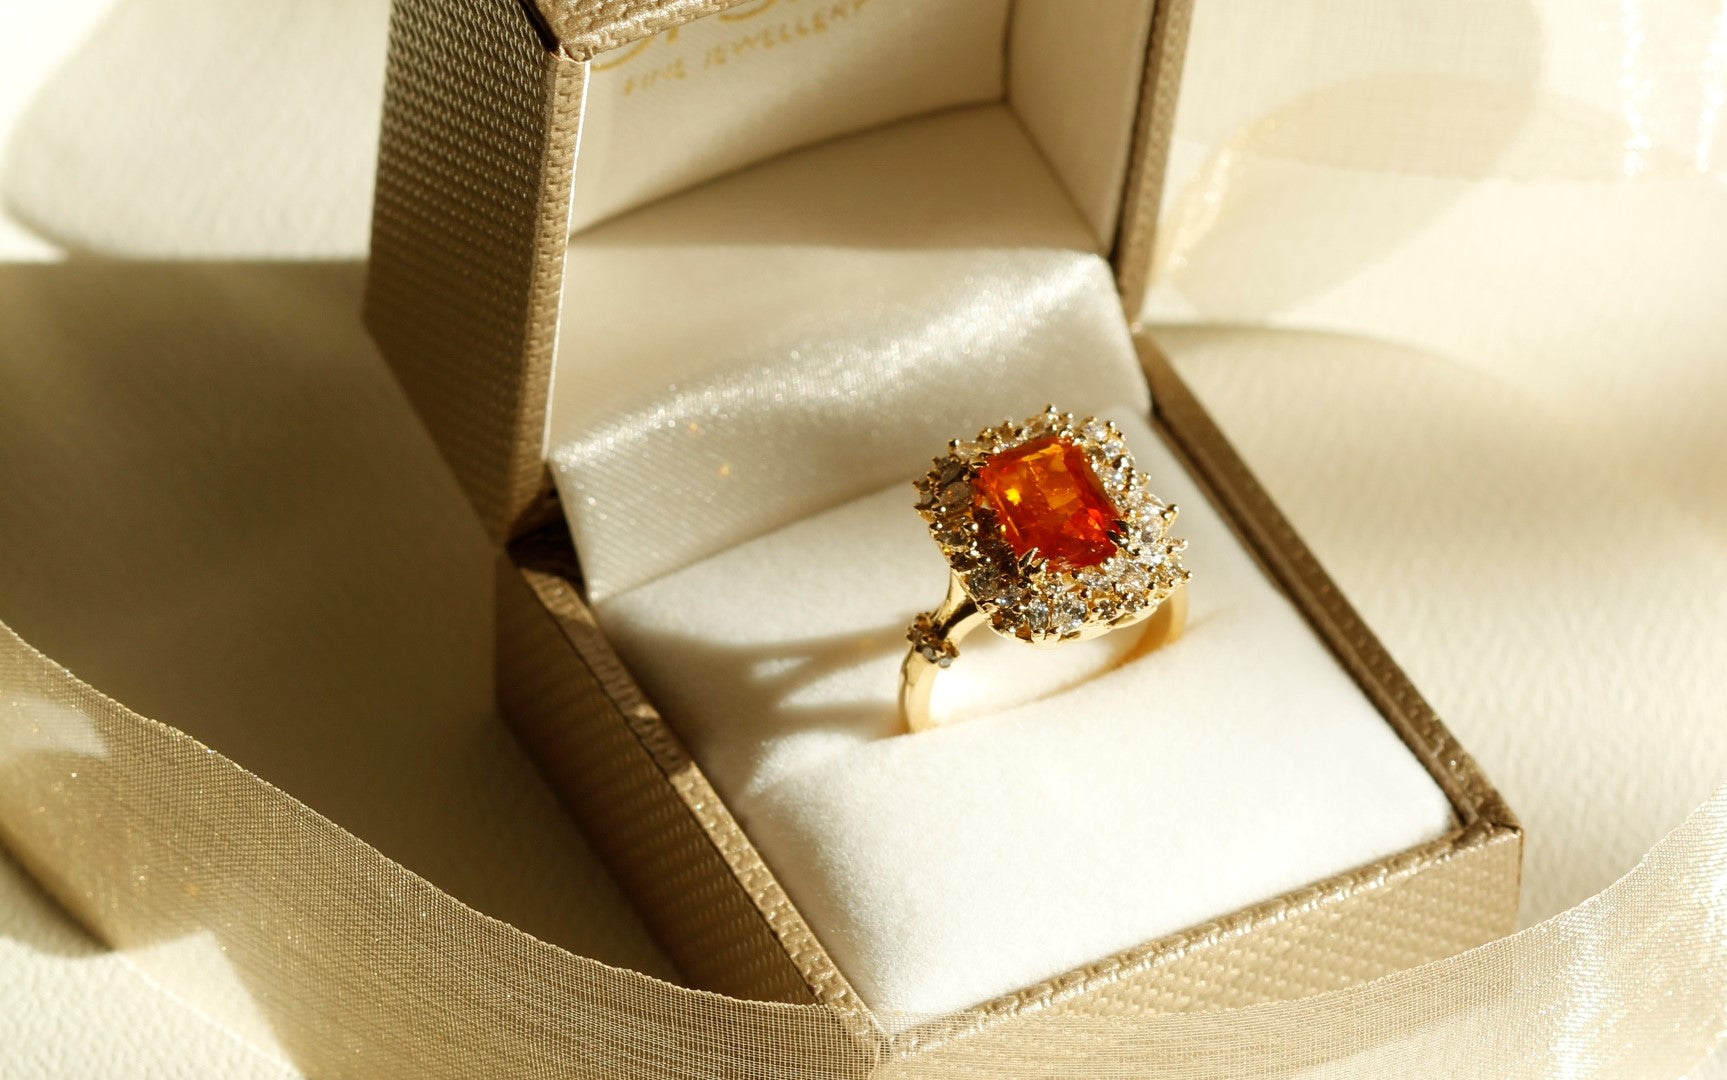 Marquise cut diamond, pear cut diamond, and round brilliant cut diamond surrounding an orange sapphire in a yellow gold ring